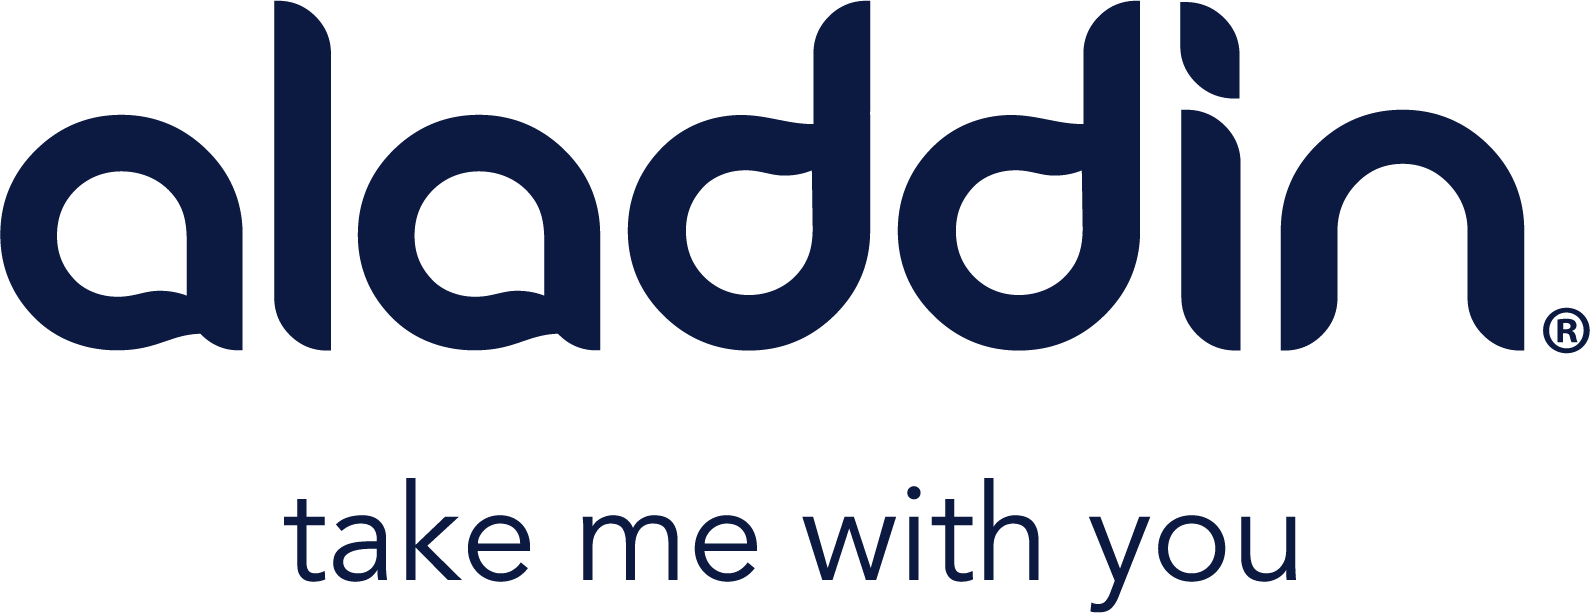 Logo Aladdin